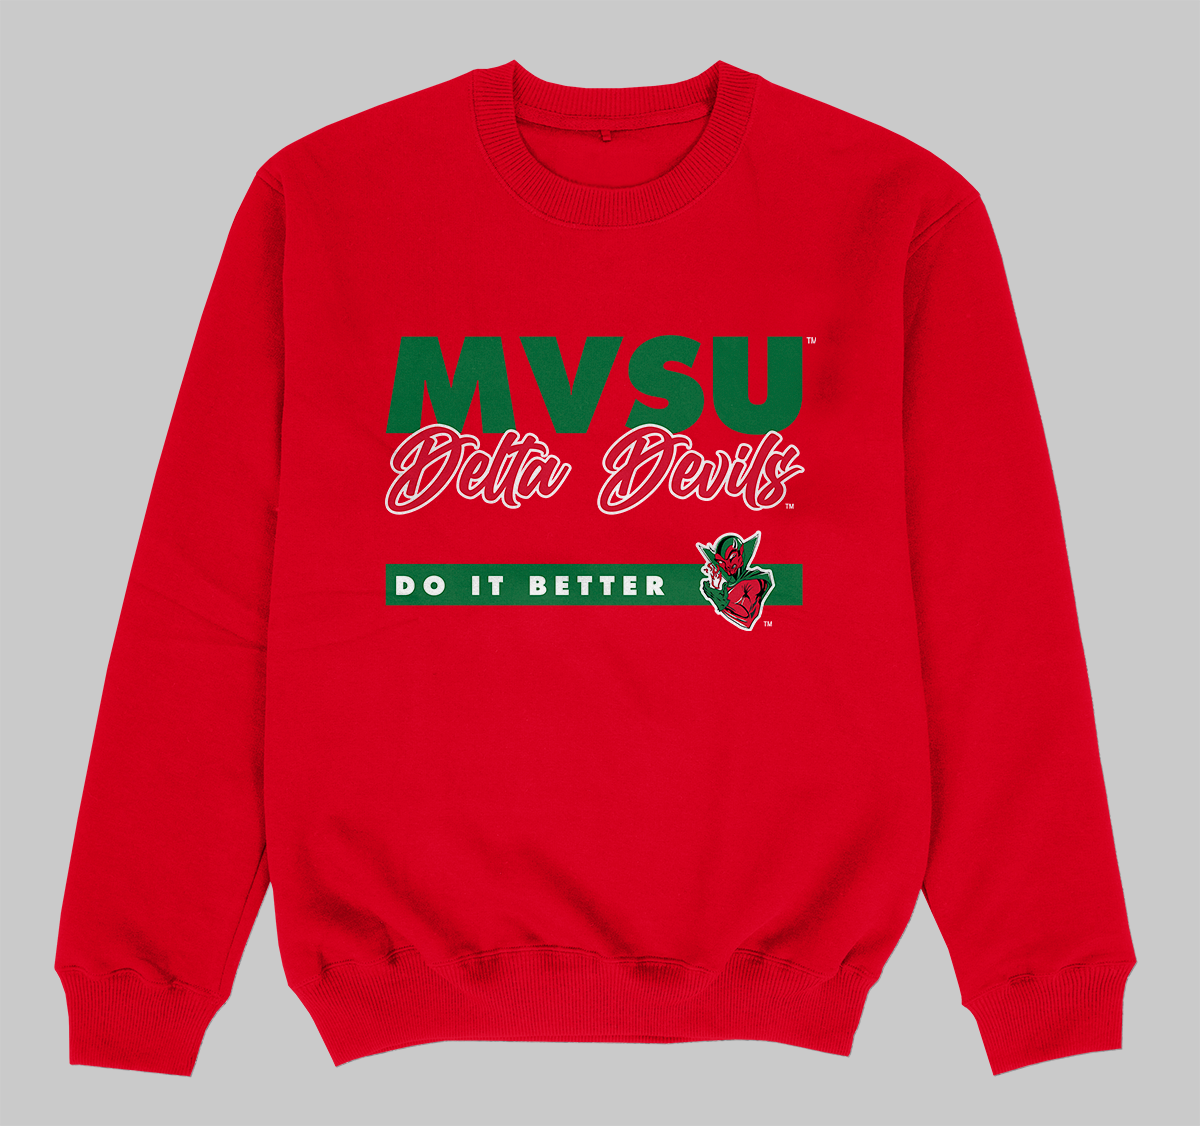 MVSU Does It Better Sweatshirts (Various Colors)